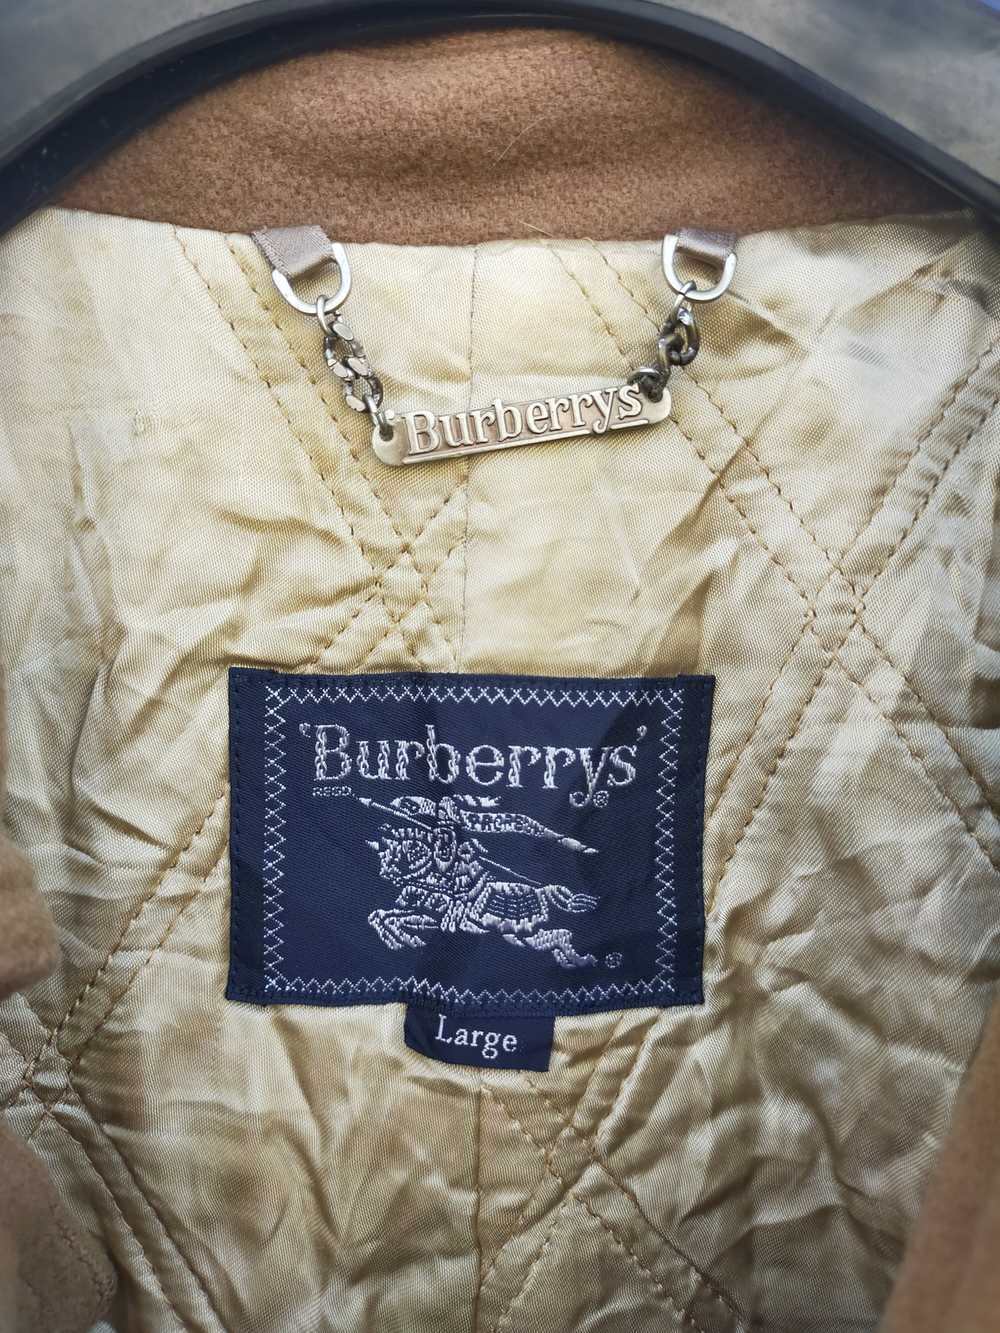 Burberry × Japanese Brand burberrys - image 6